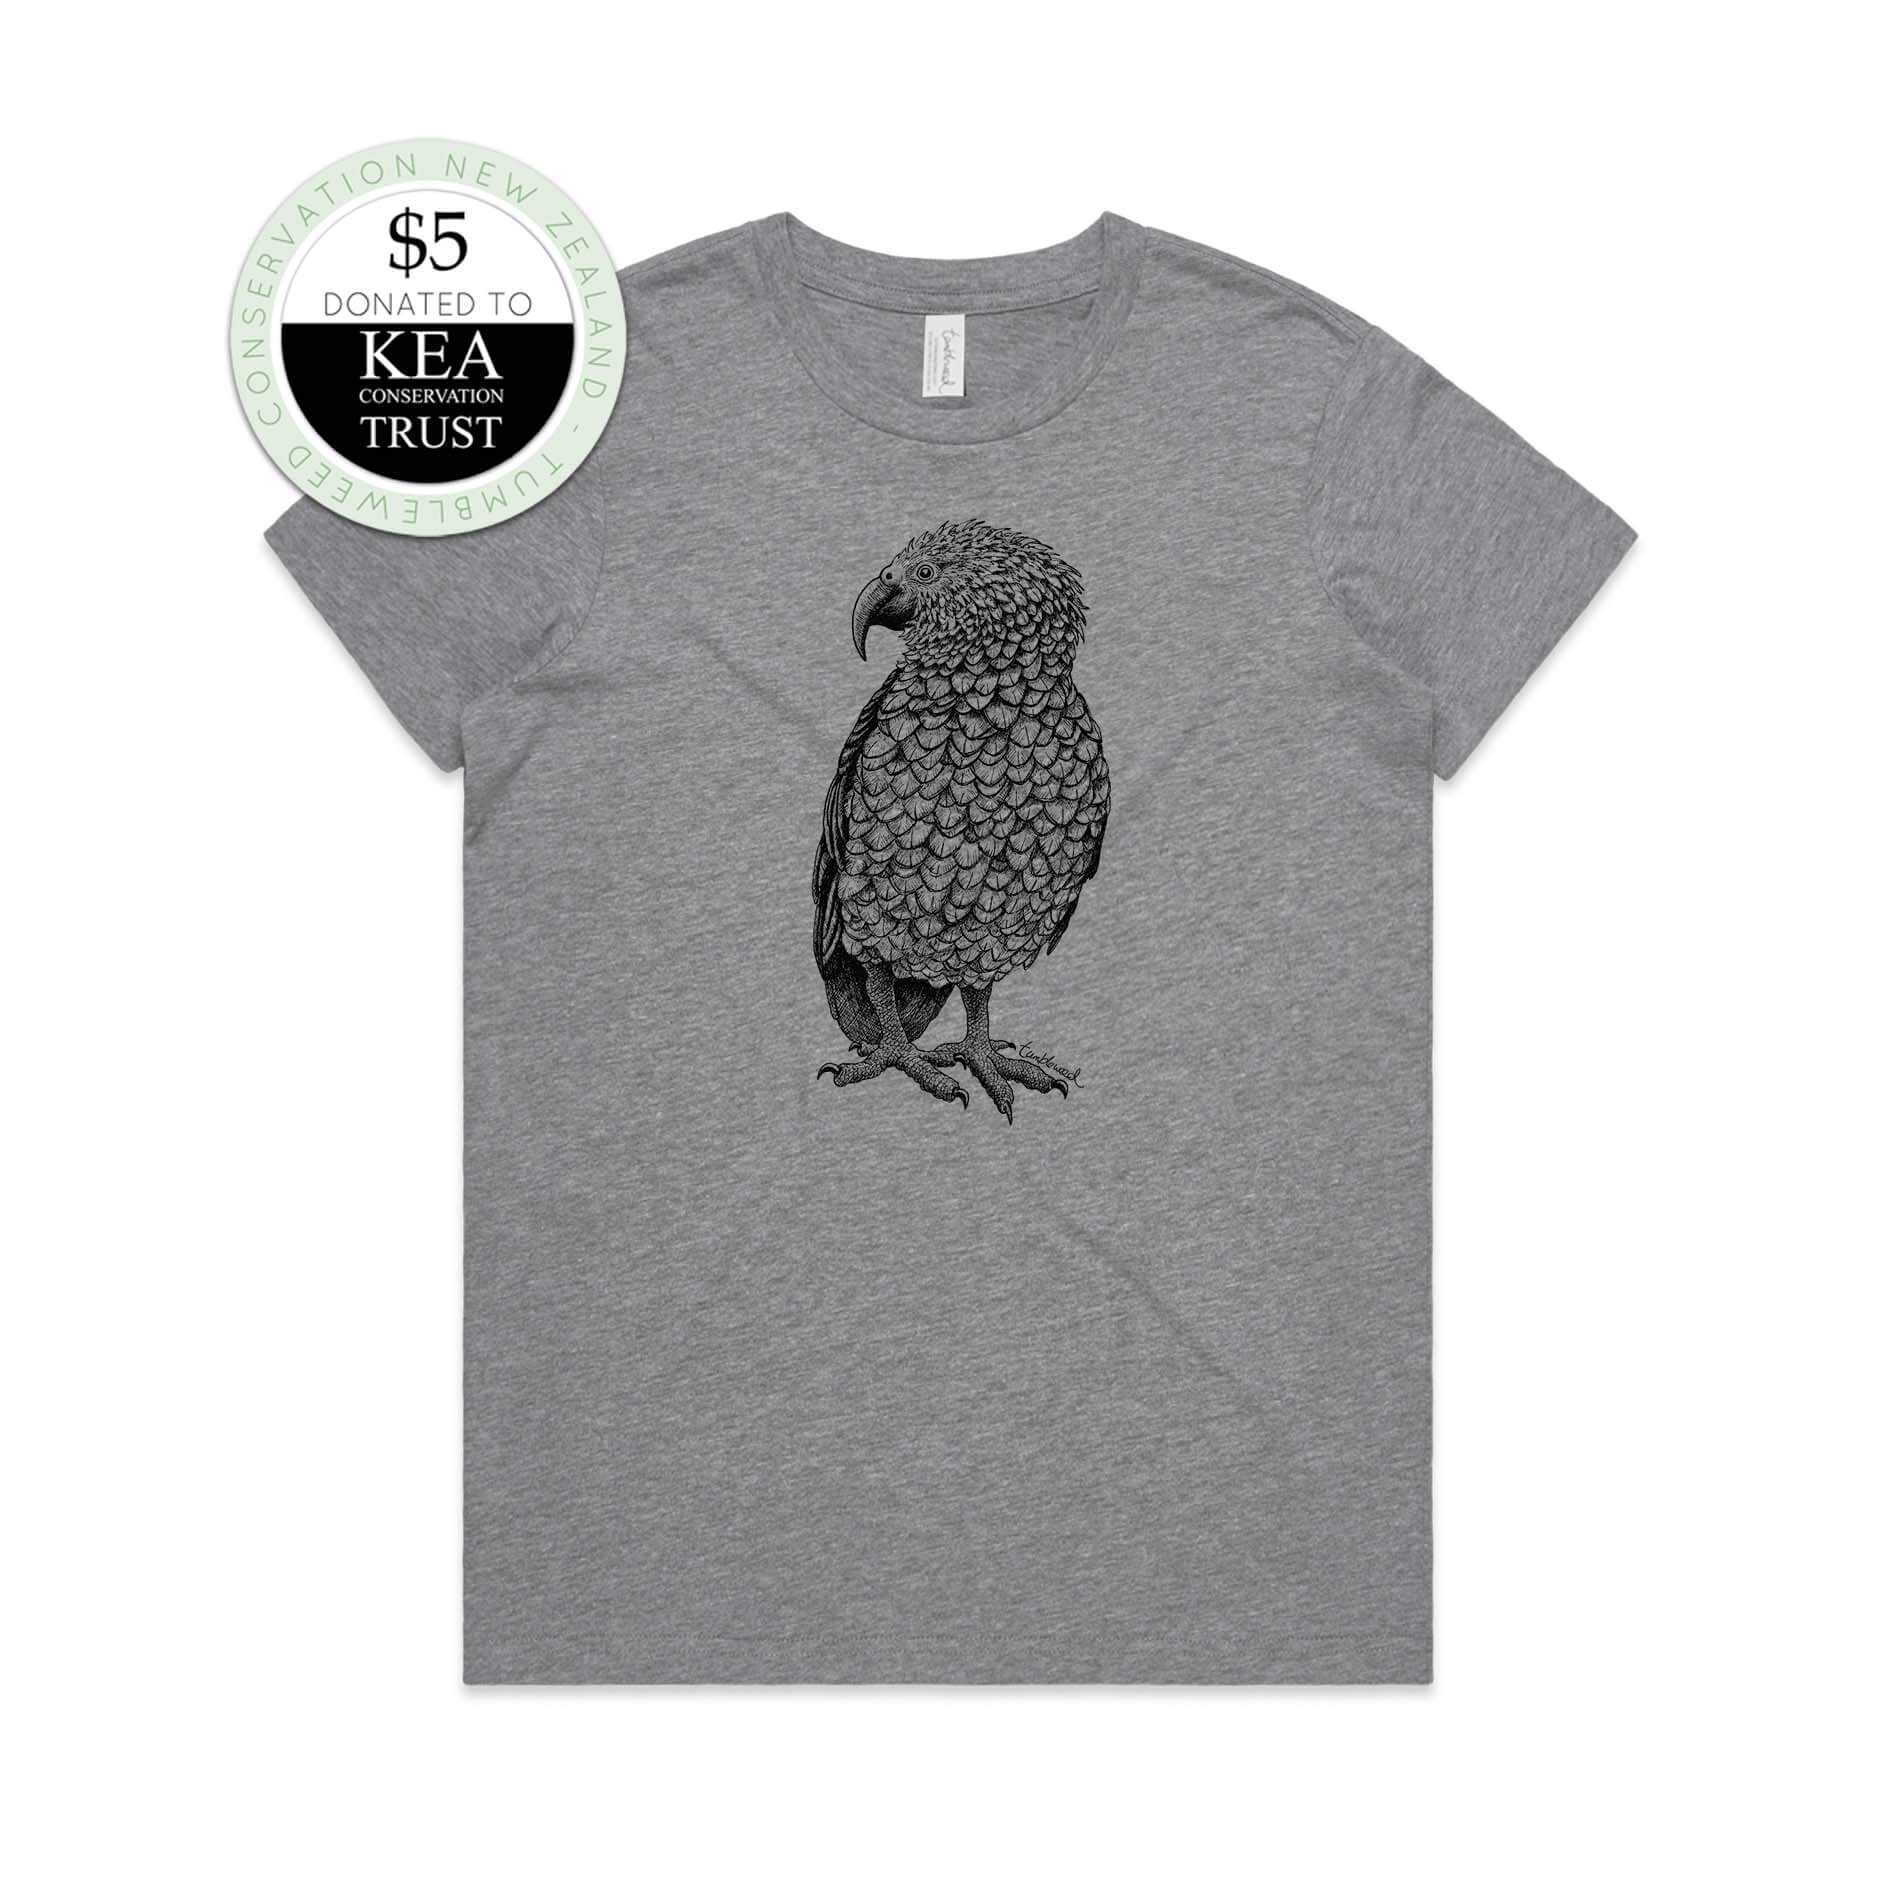 Grey marle, female t-shirt featuring a screen printed kea design.